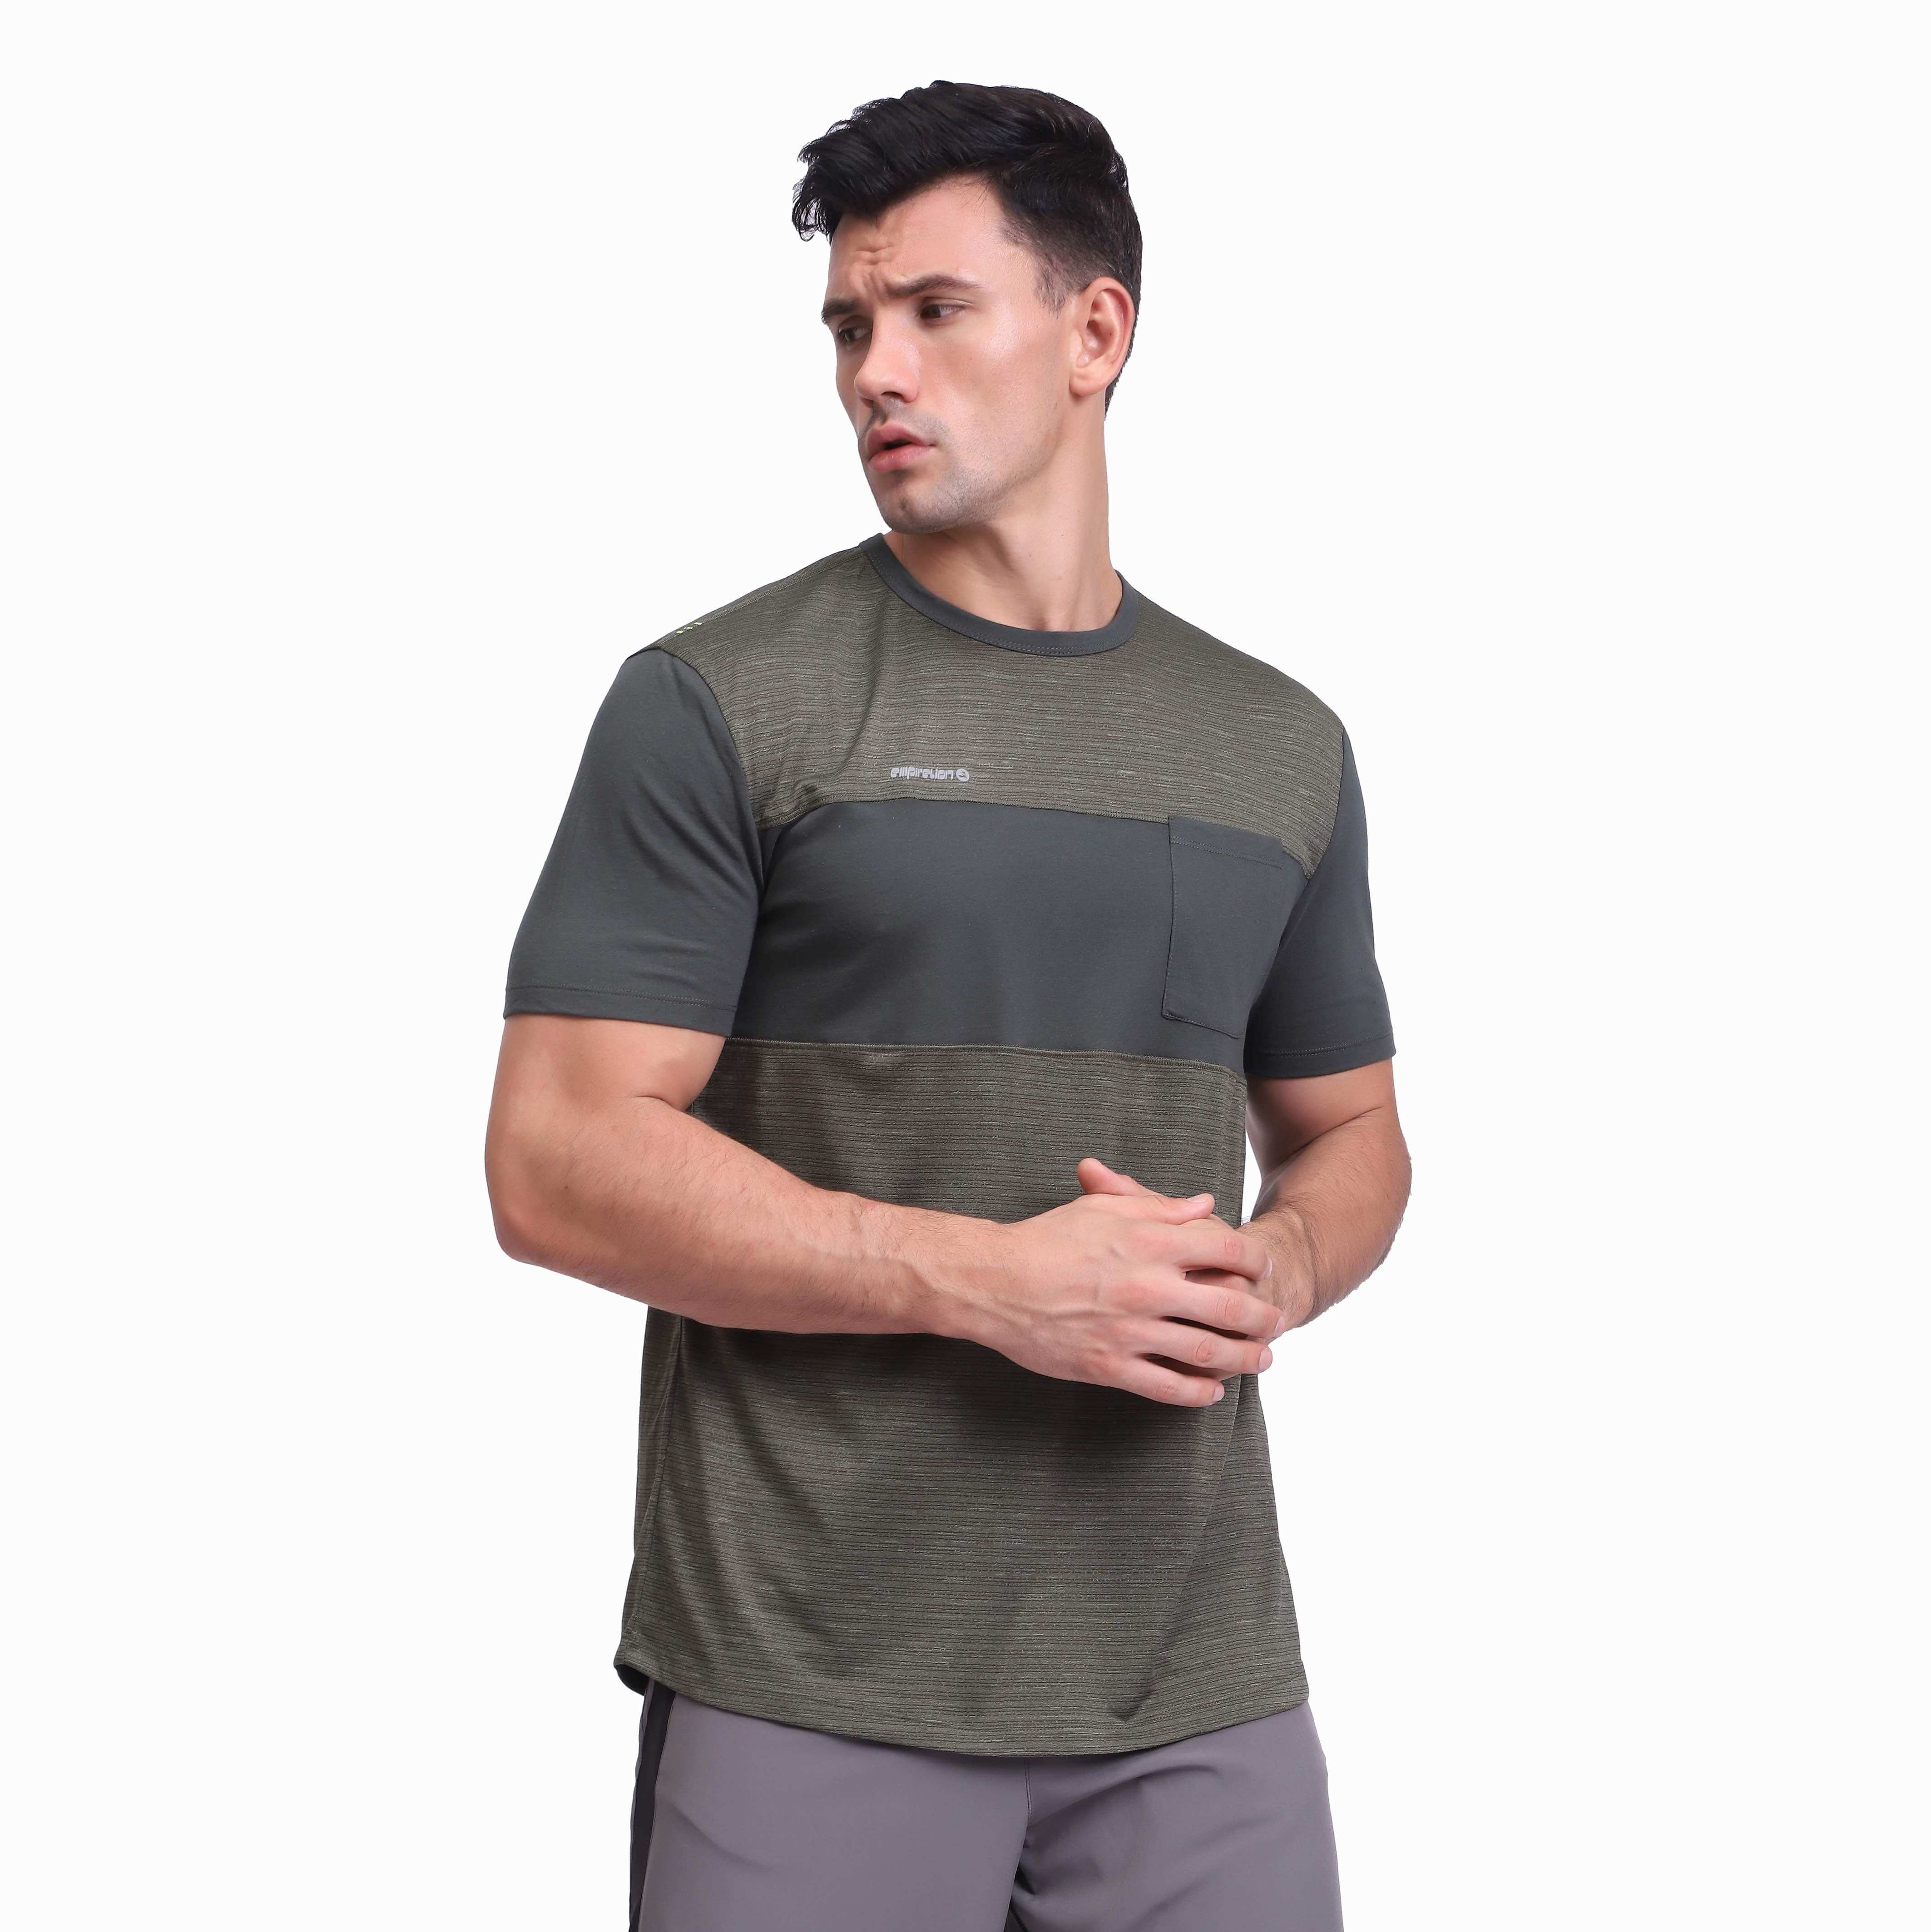 Men's Running Dry Fit T-Shirt Athletic Panel Short Sleeve Tops